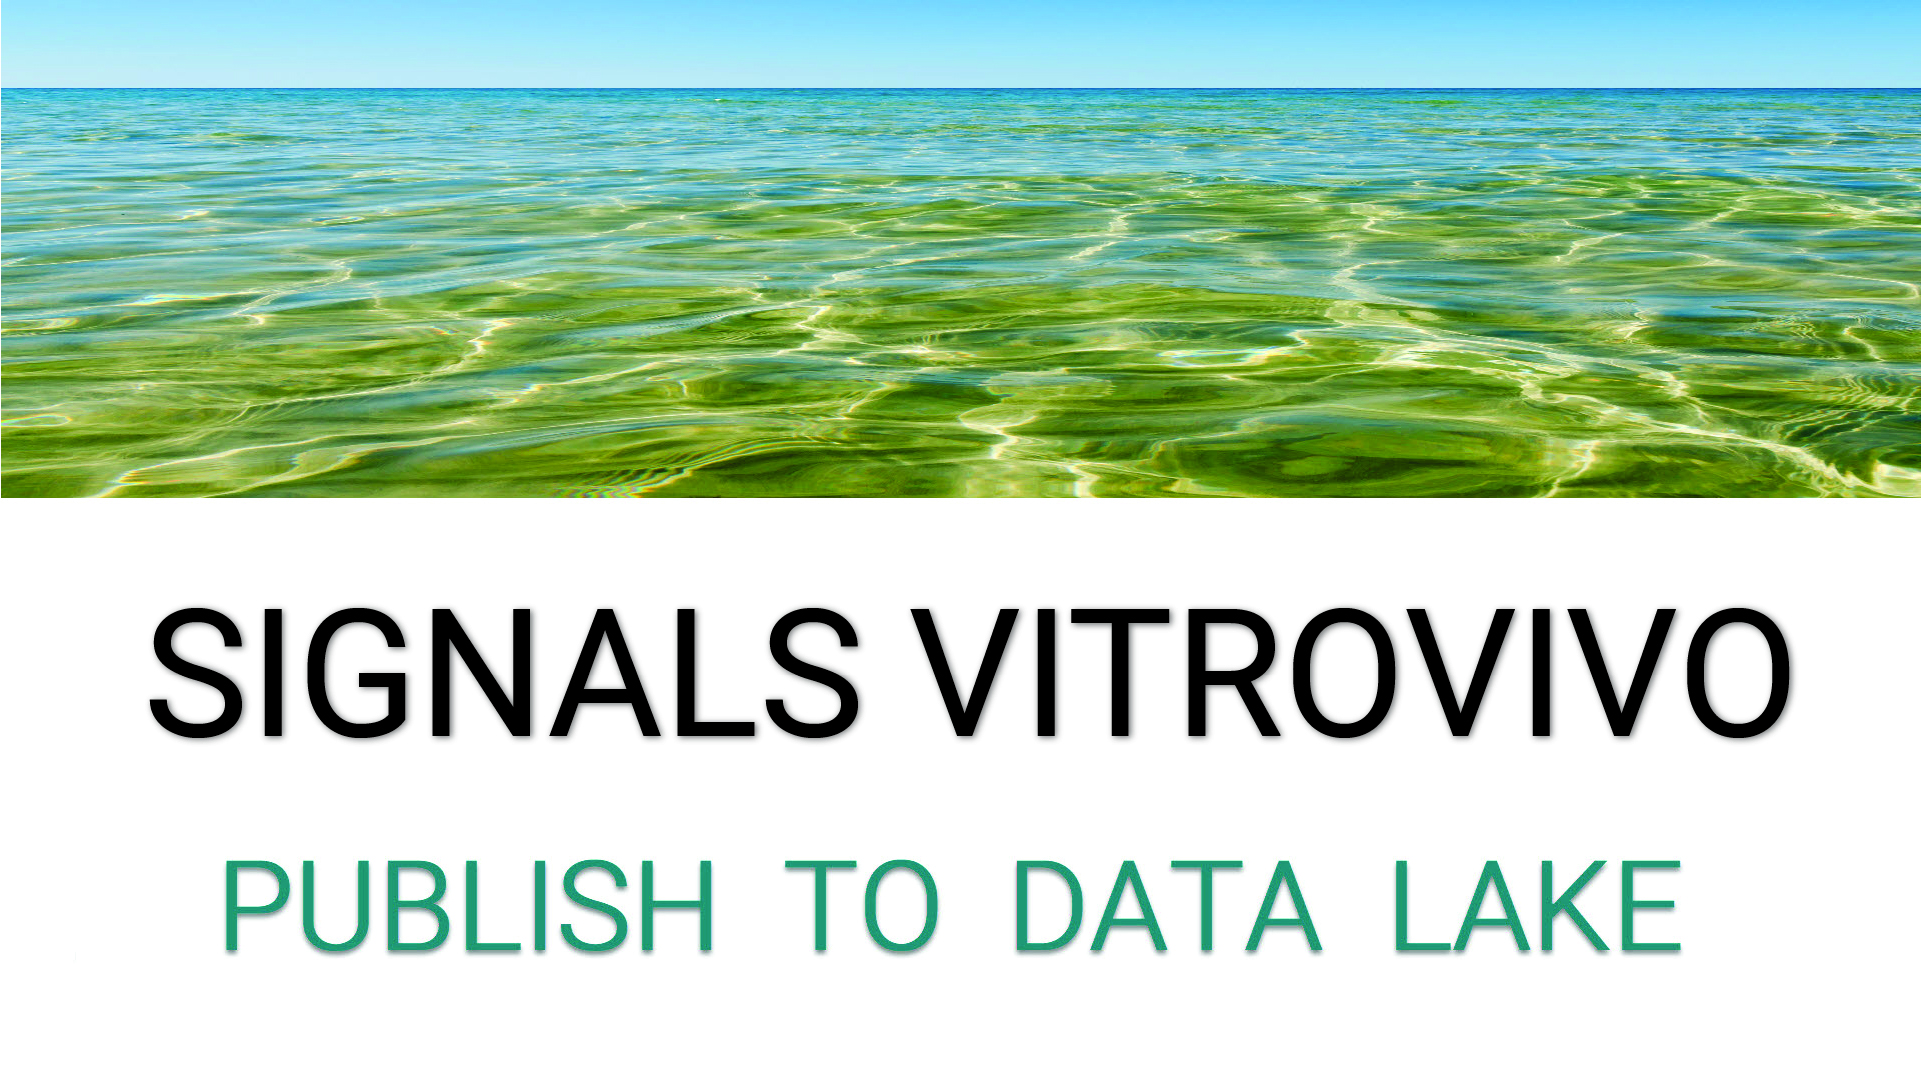 Watch Signals Vitro Vivo Features | 4 Part Video Series | Publish to Data Lake | PerkinElmer Informatics on YouTube.